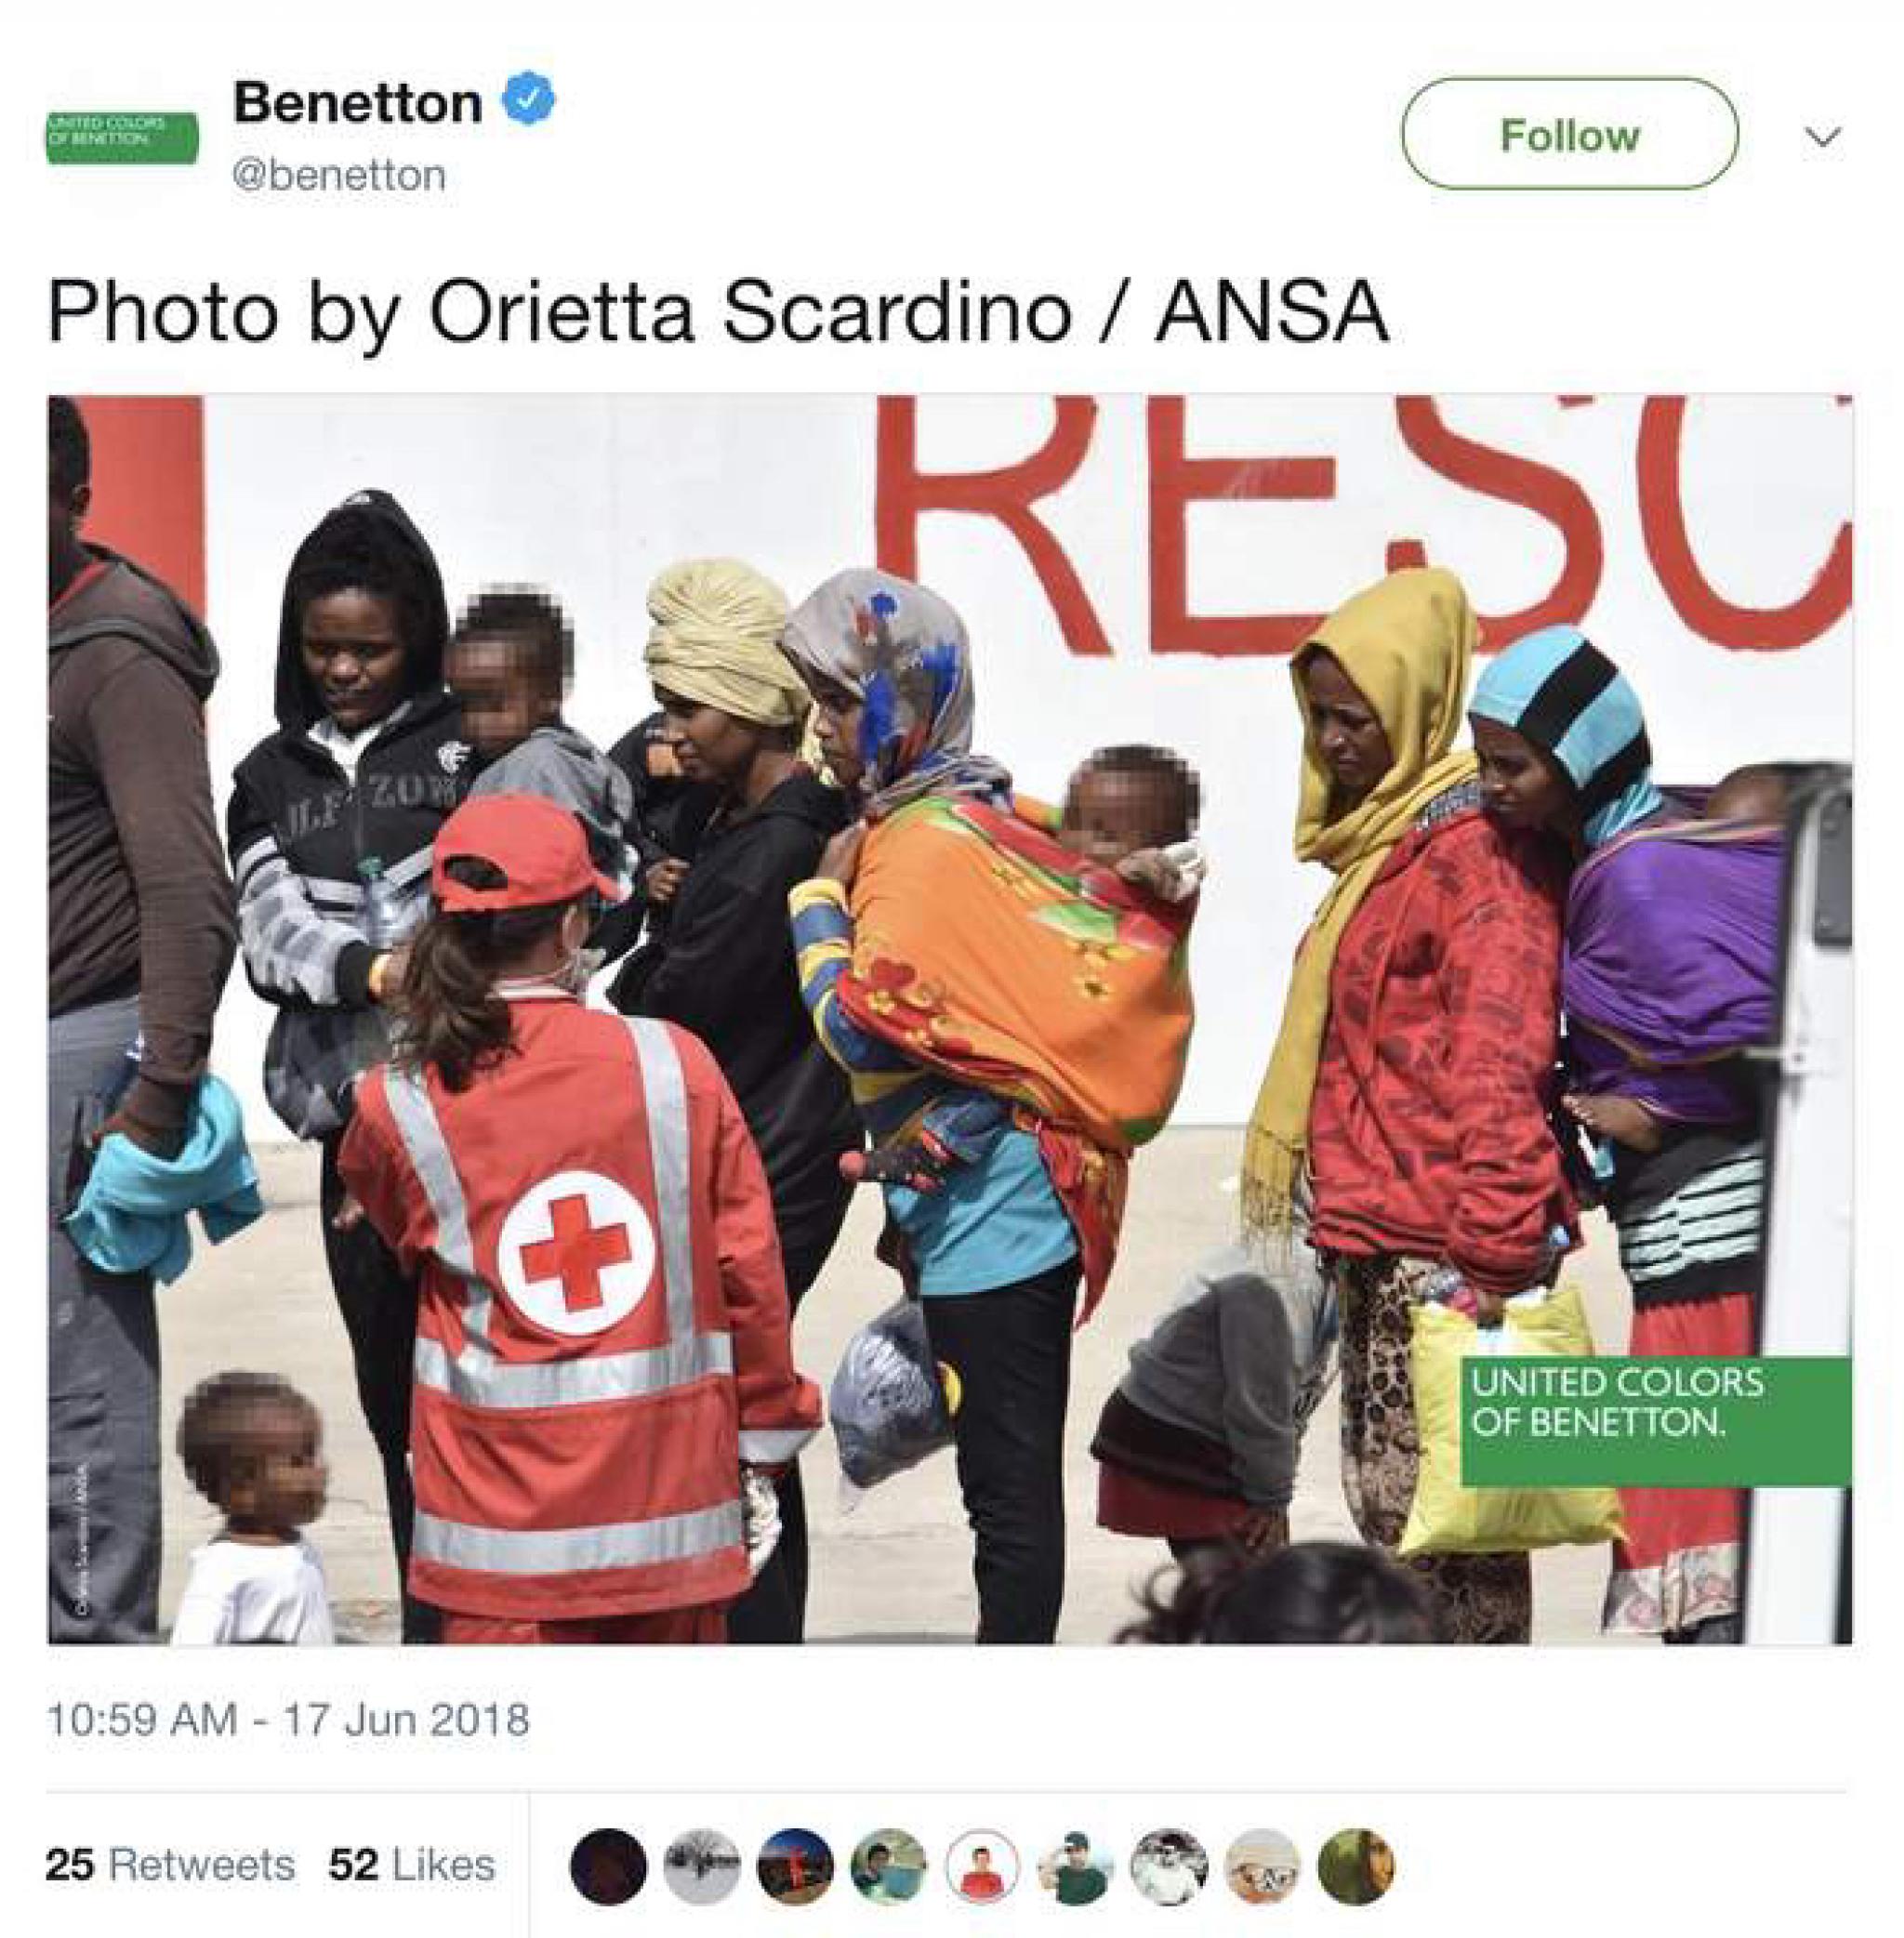 Photos refugees advertise Benetton